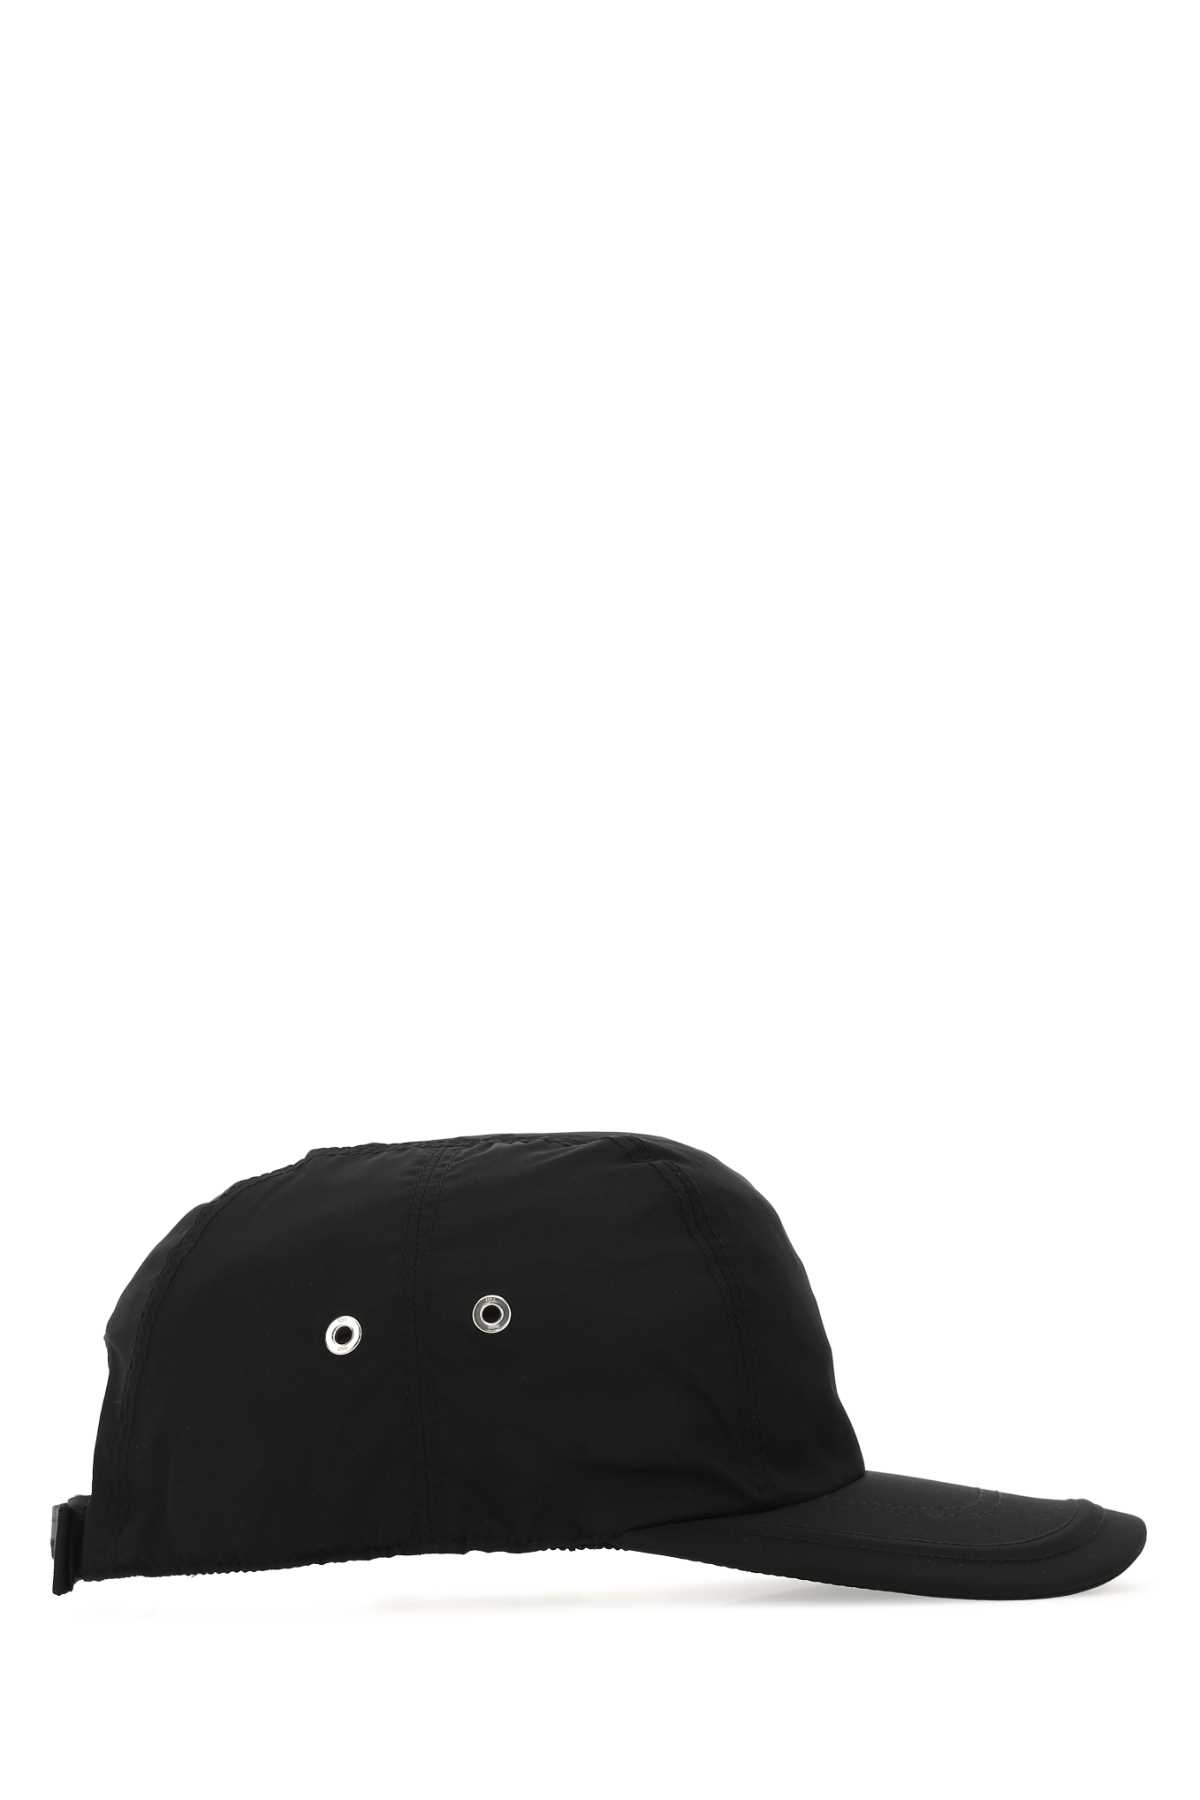 Alyx Black Polyester Baseball Cap